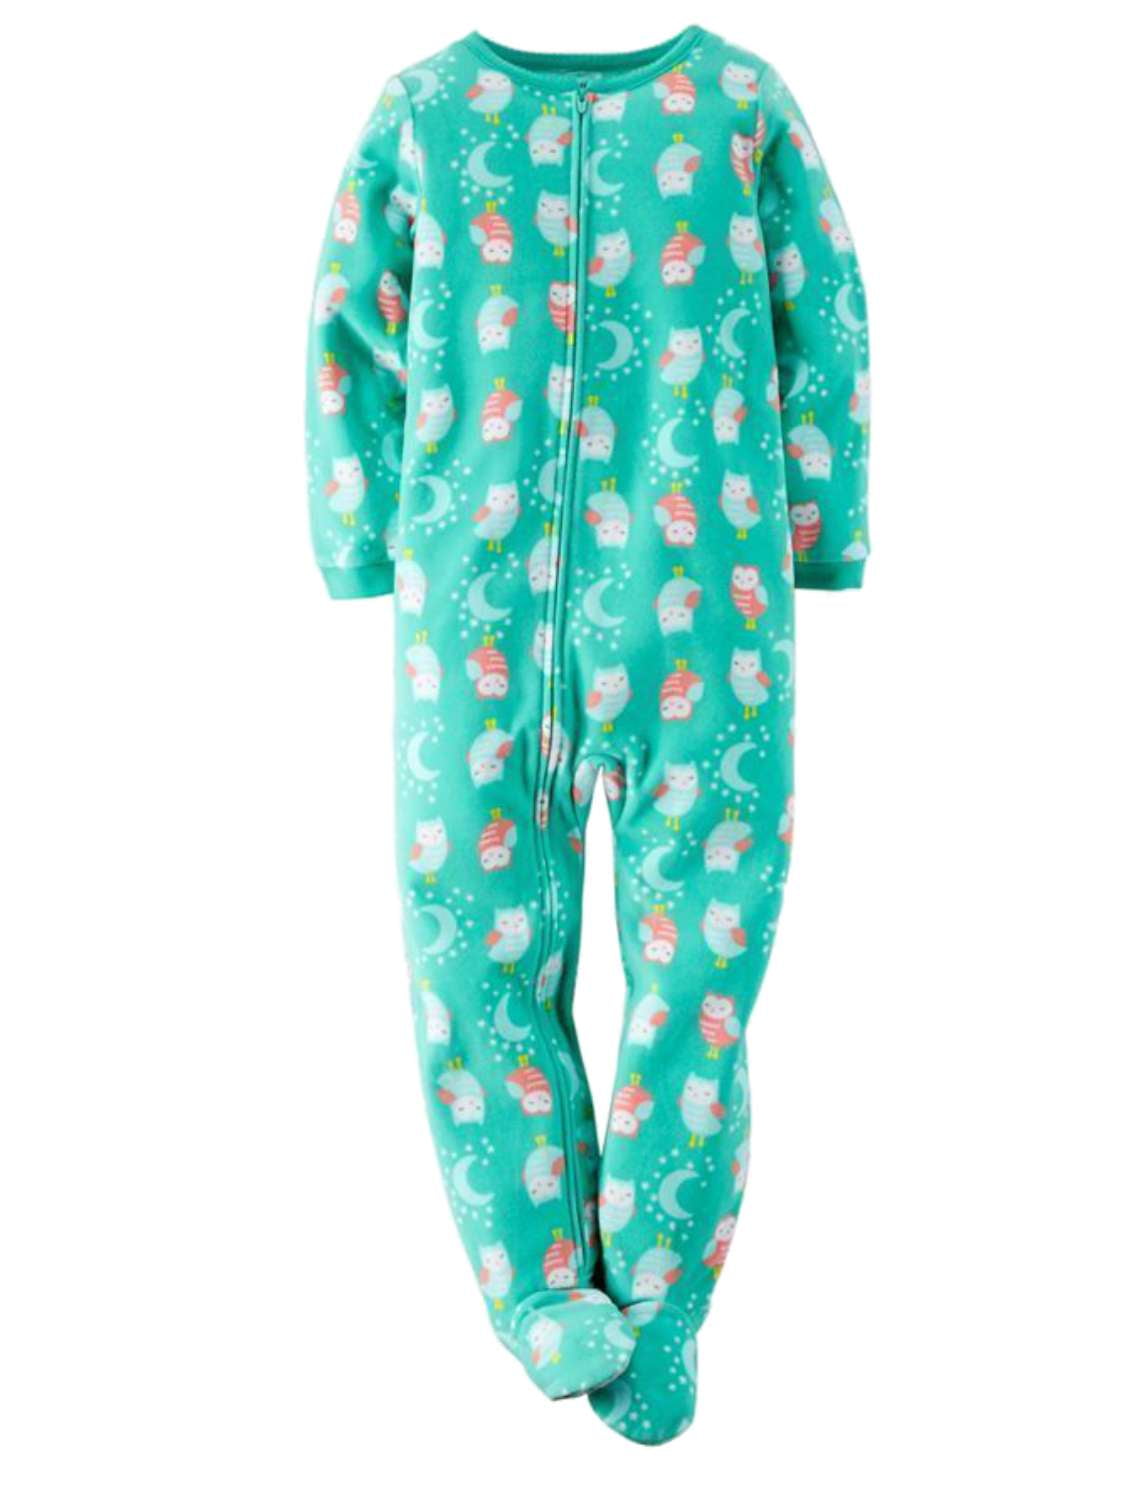 Carter's Carters Toddler Girls Plush Green Owl Footed Sleeper Sleep & Play Pajama 4T Walmart